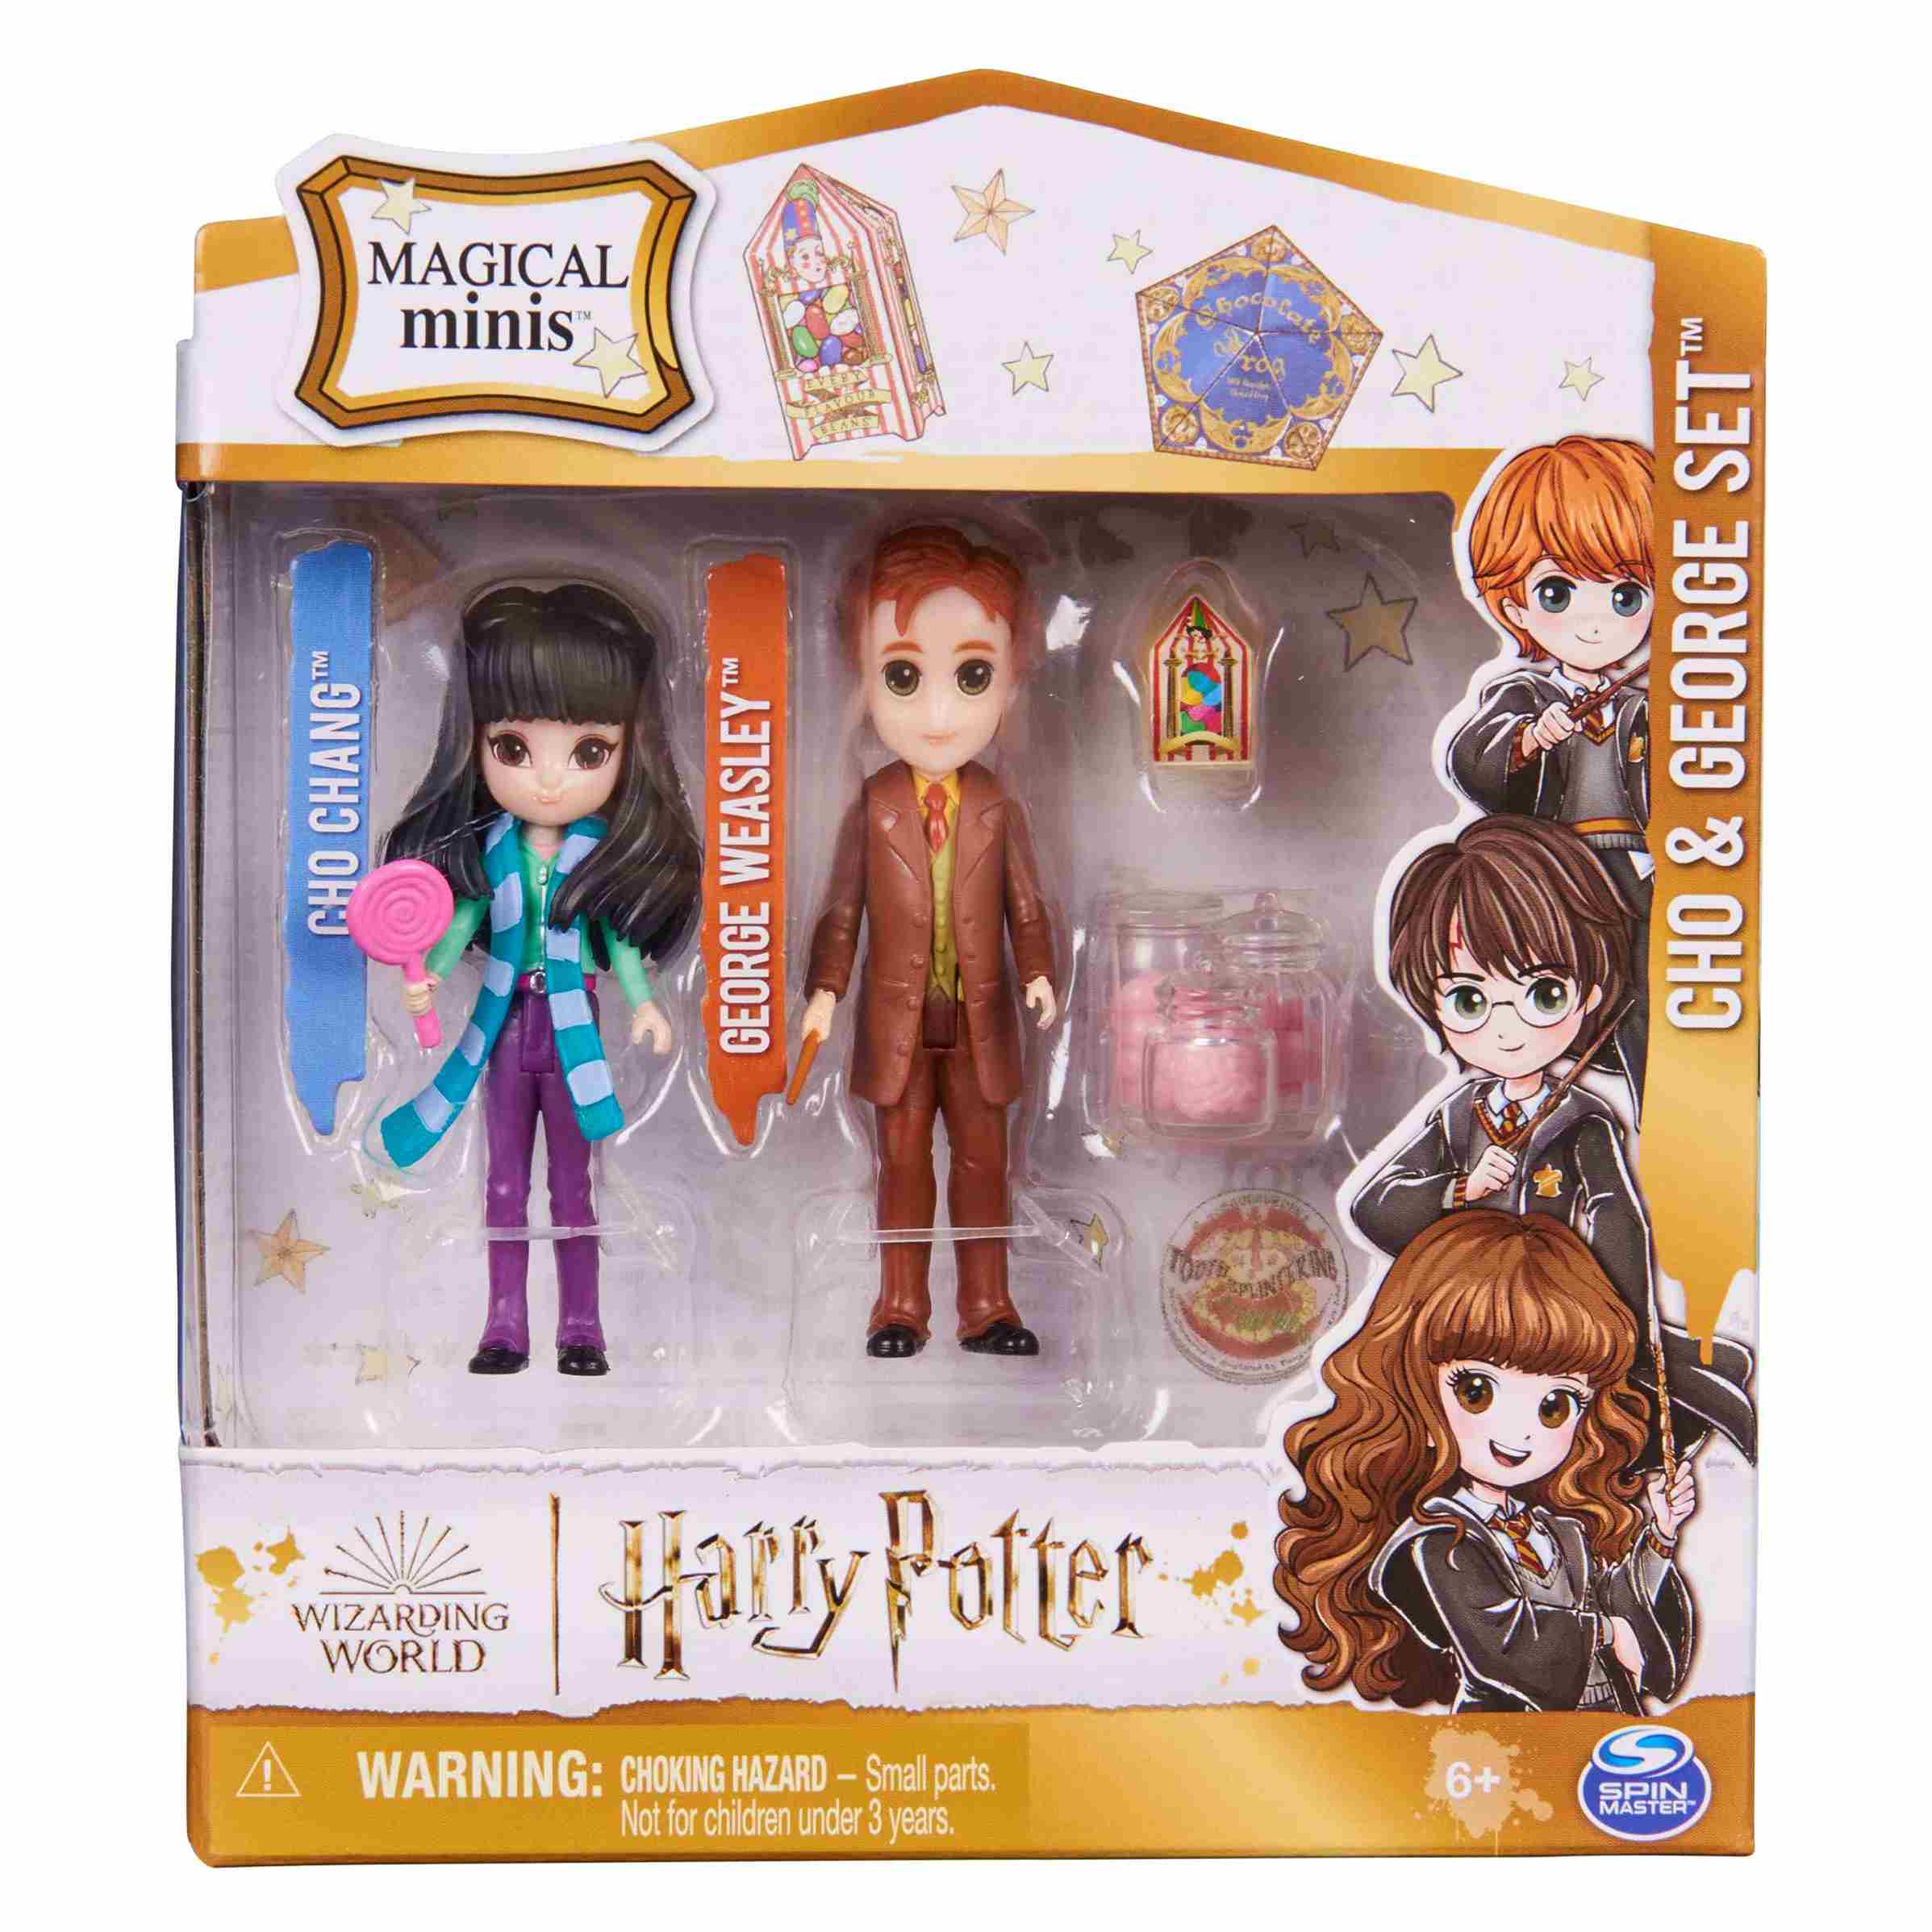 Wizarding world harry potter: τζόρτζ και τσο μίνι φιγούρες 6064901 - Wizarding World Harry Potter